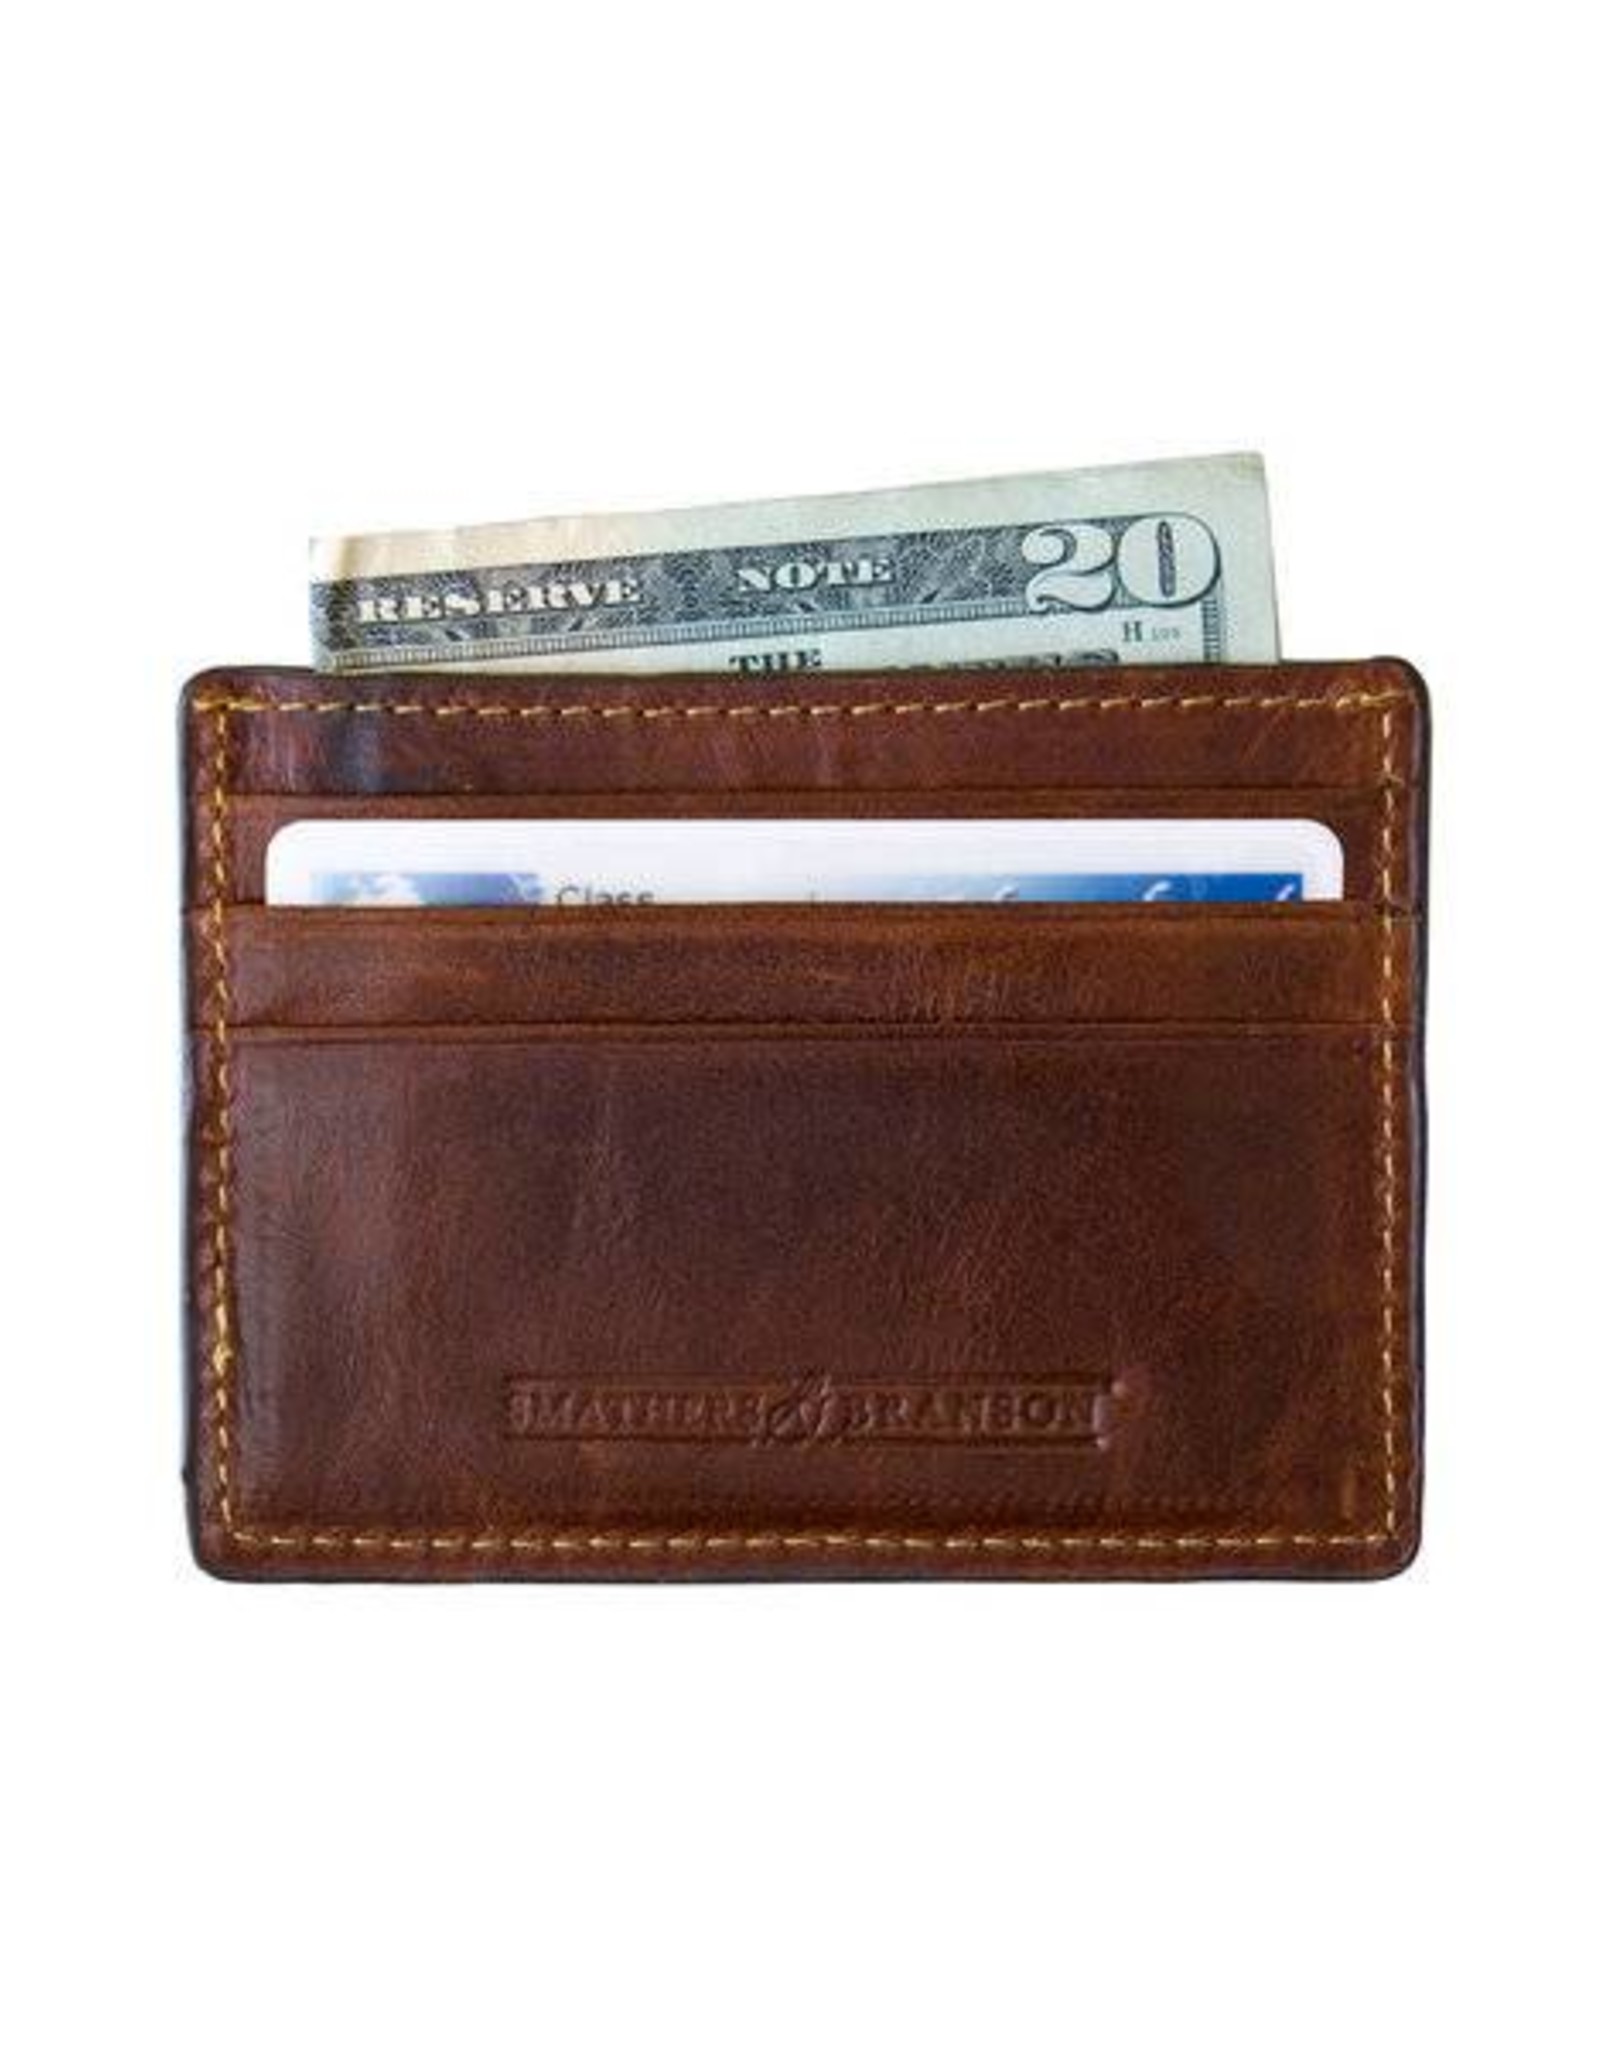 Smather's & Branson Card Wallet Missouri